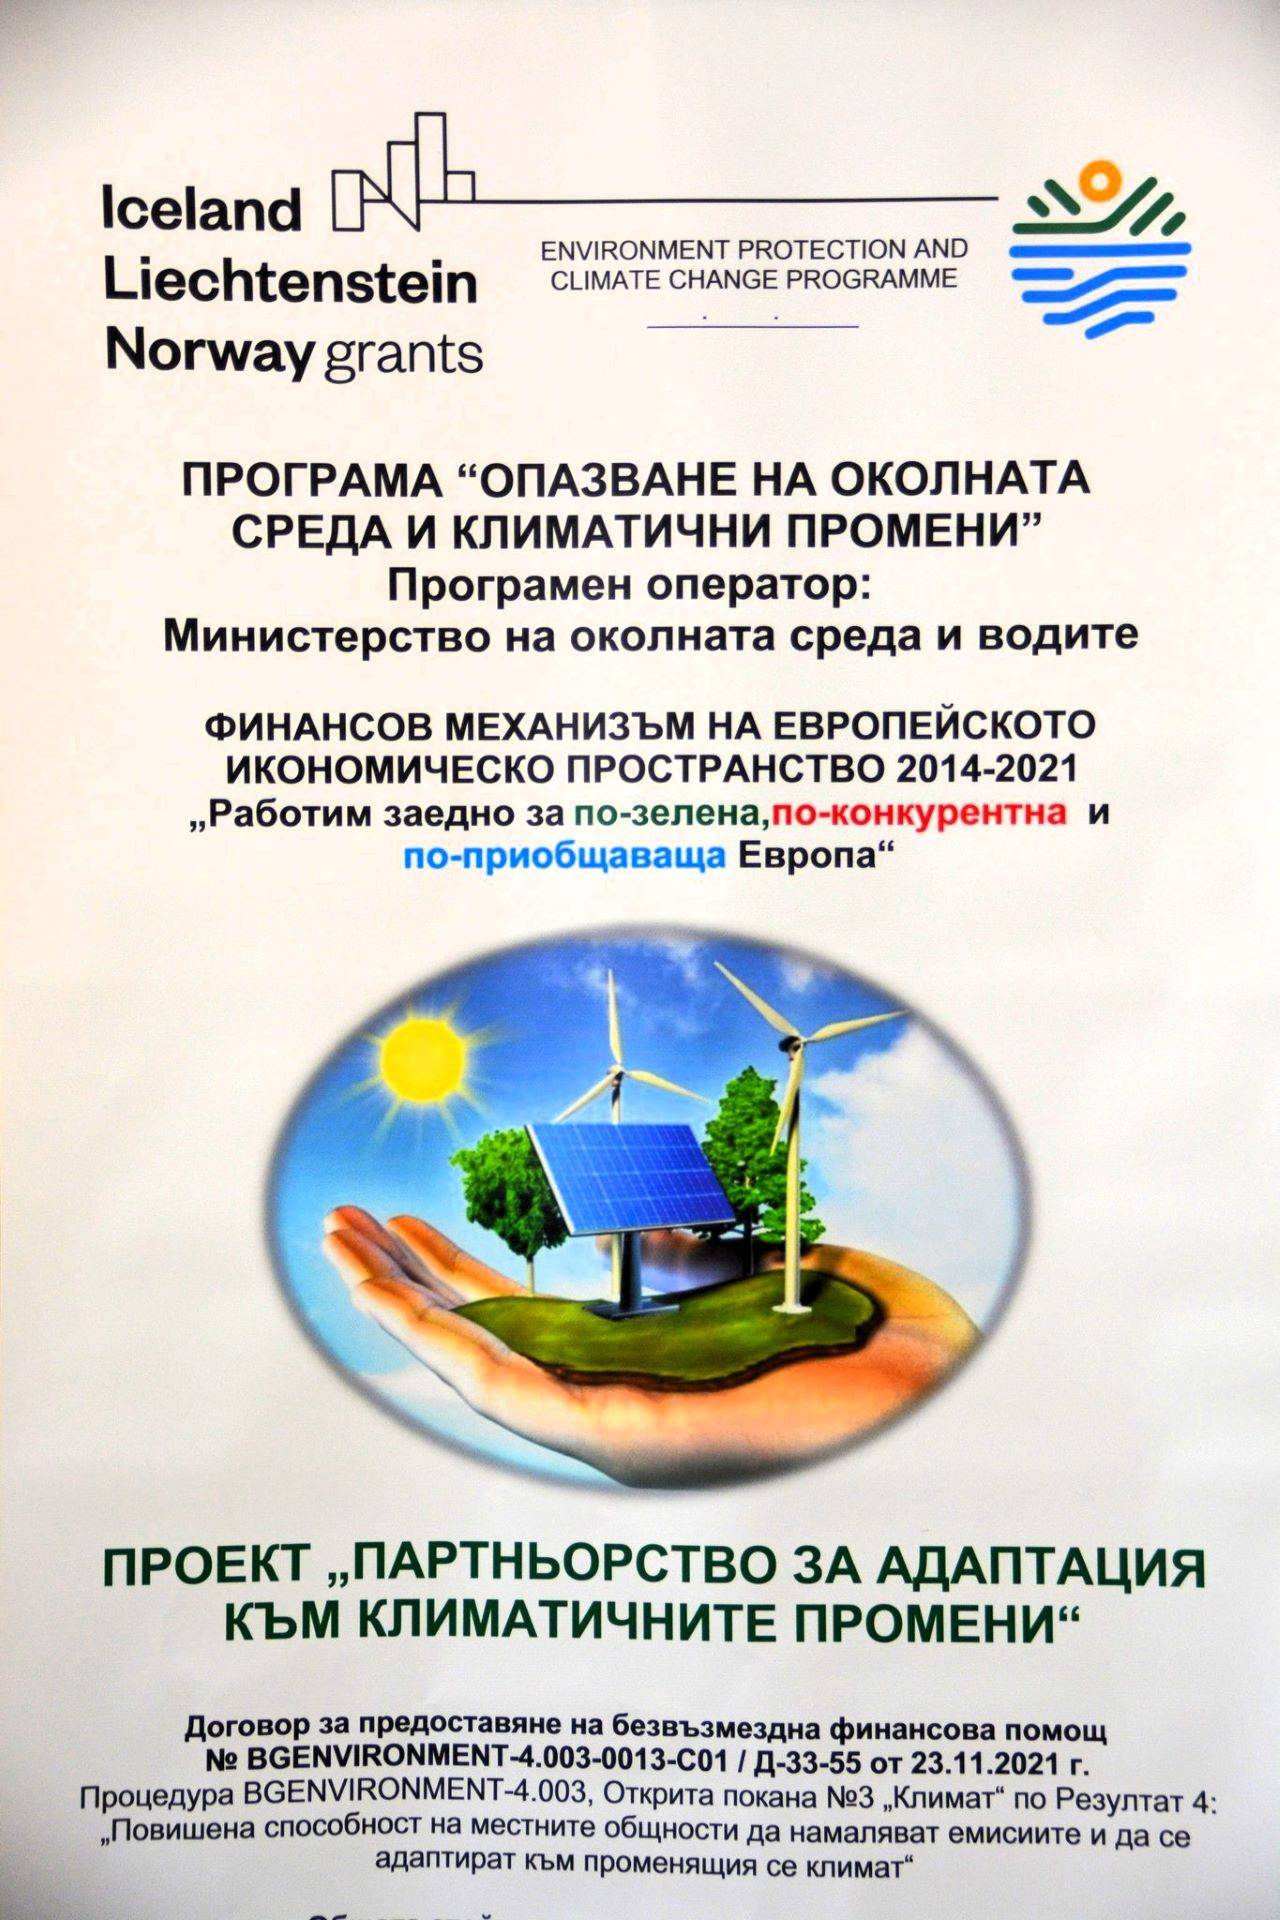 Община Асеновград отчете резултатите по проекта за фотоволтаичните централи